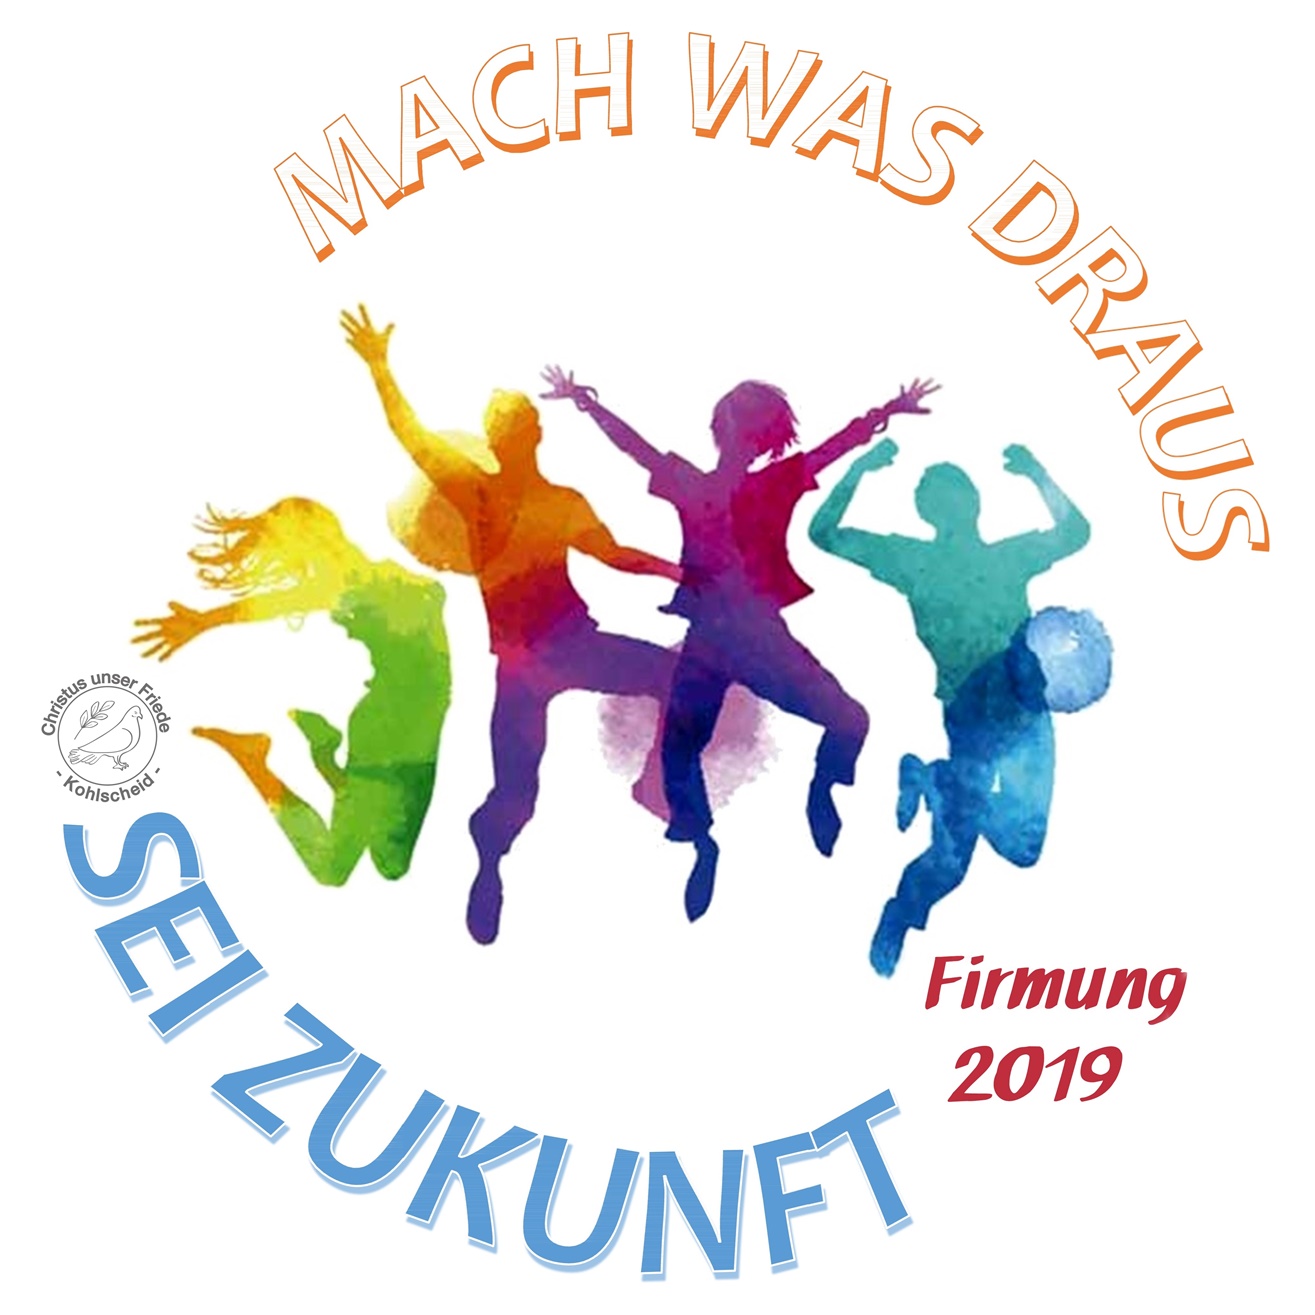 Firmung 2019 - Mach was draus, sei Zukunft (LOGO - FJW)a - web (c) Franz-Josef Wolf